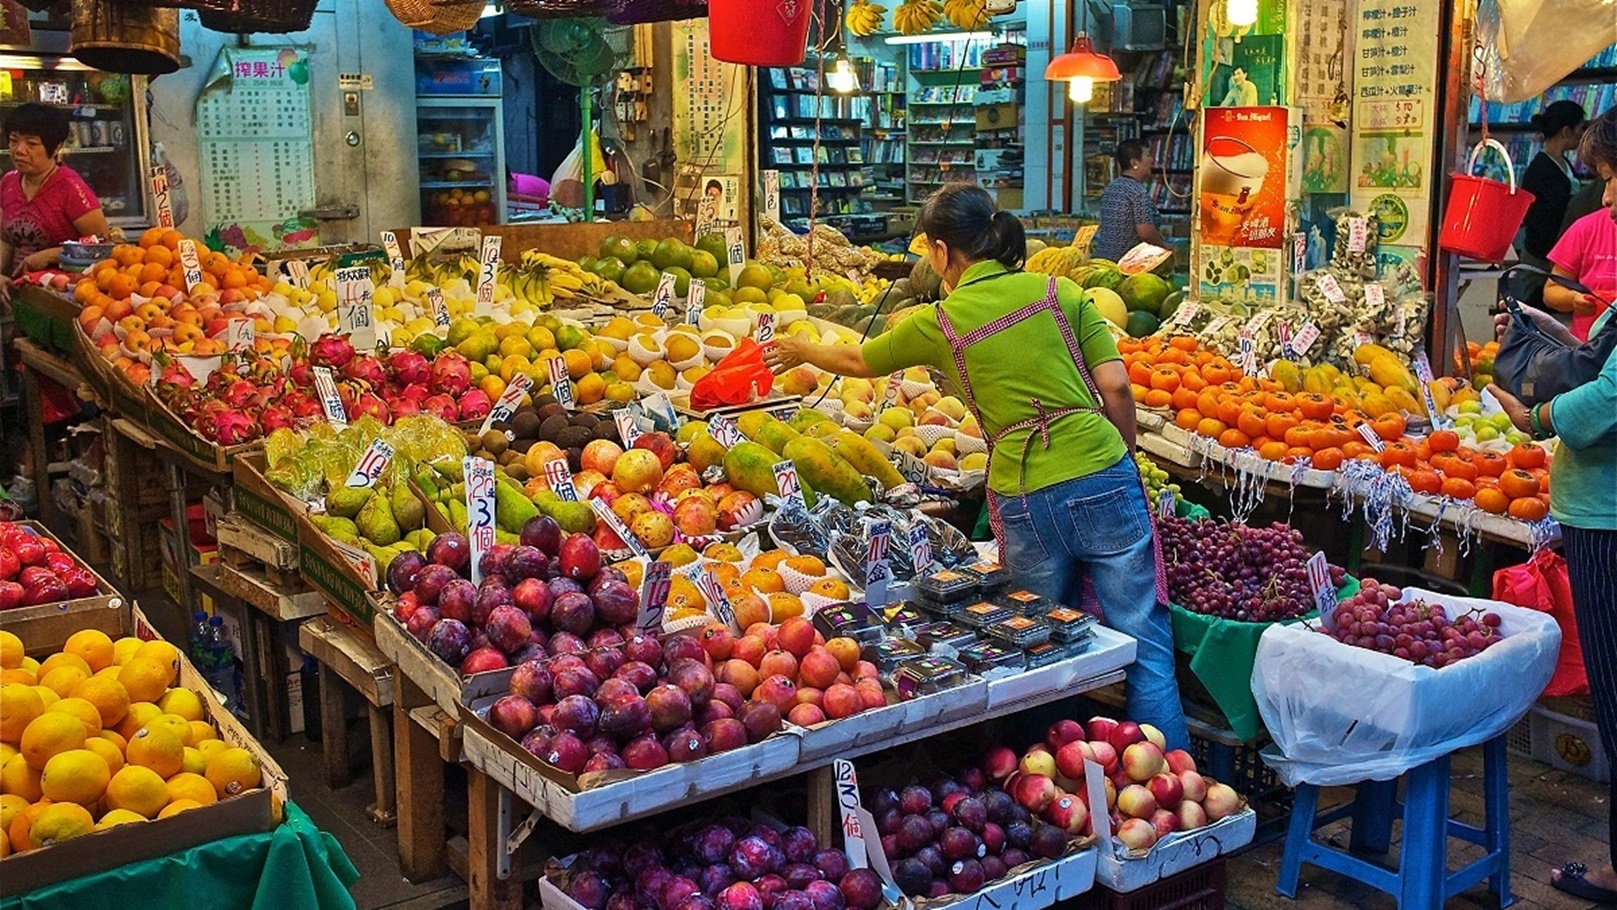 Fruit-and-vegetable-market-Photo-by-Ken-Mages-on-Unsplash-1200